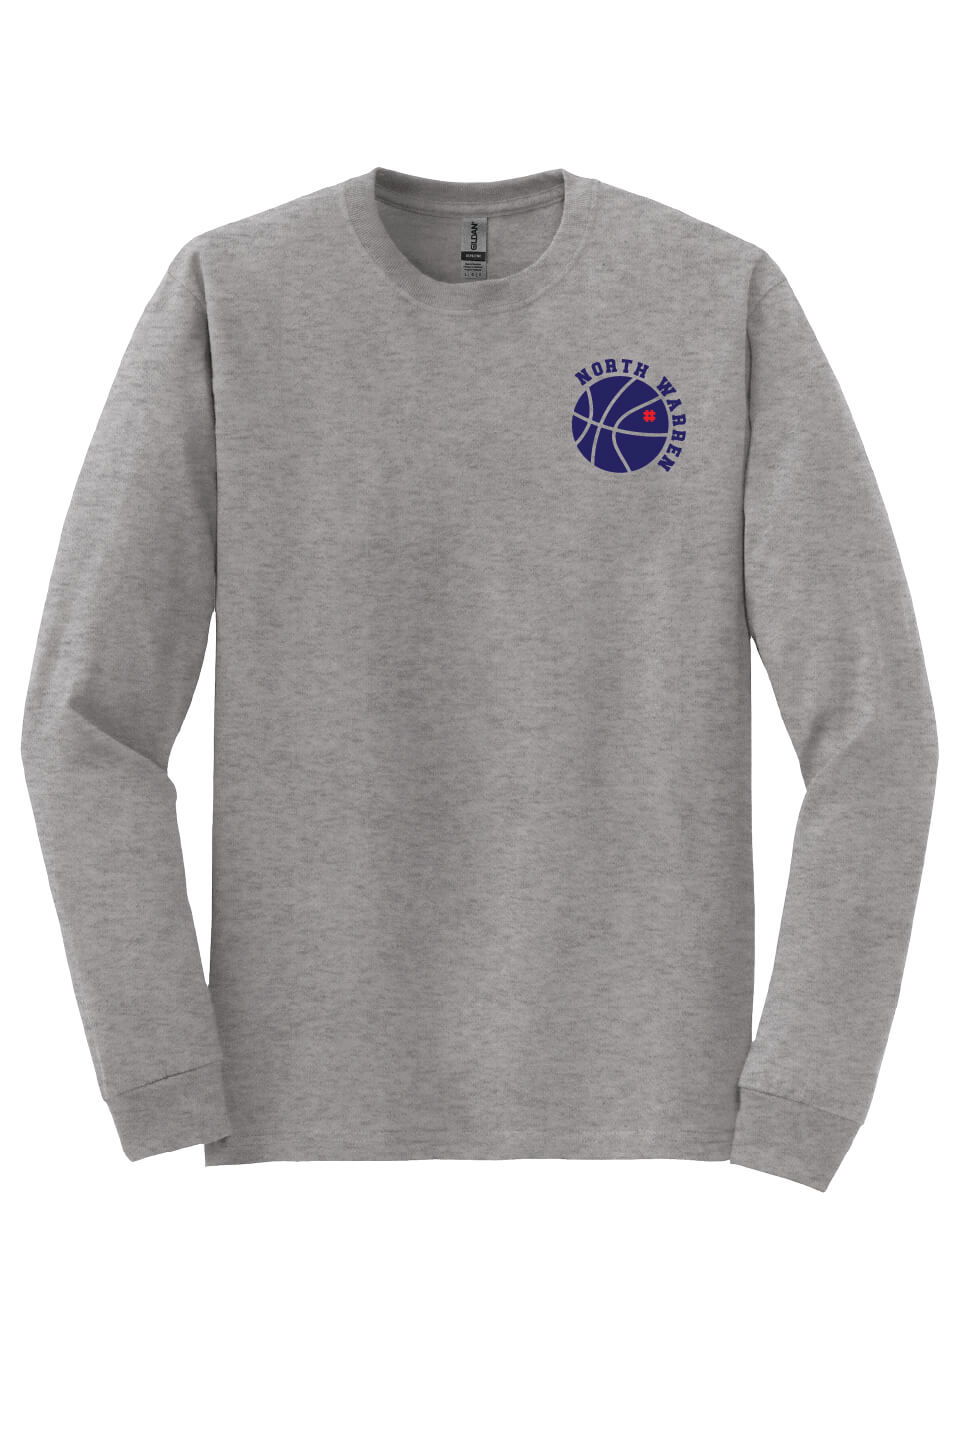 North Warren Basketball Long Sleeve T-Shirt (Youth) gray